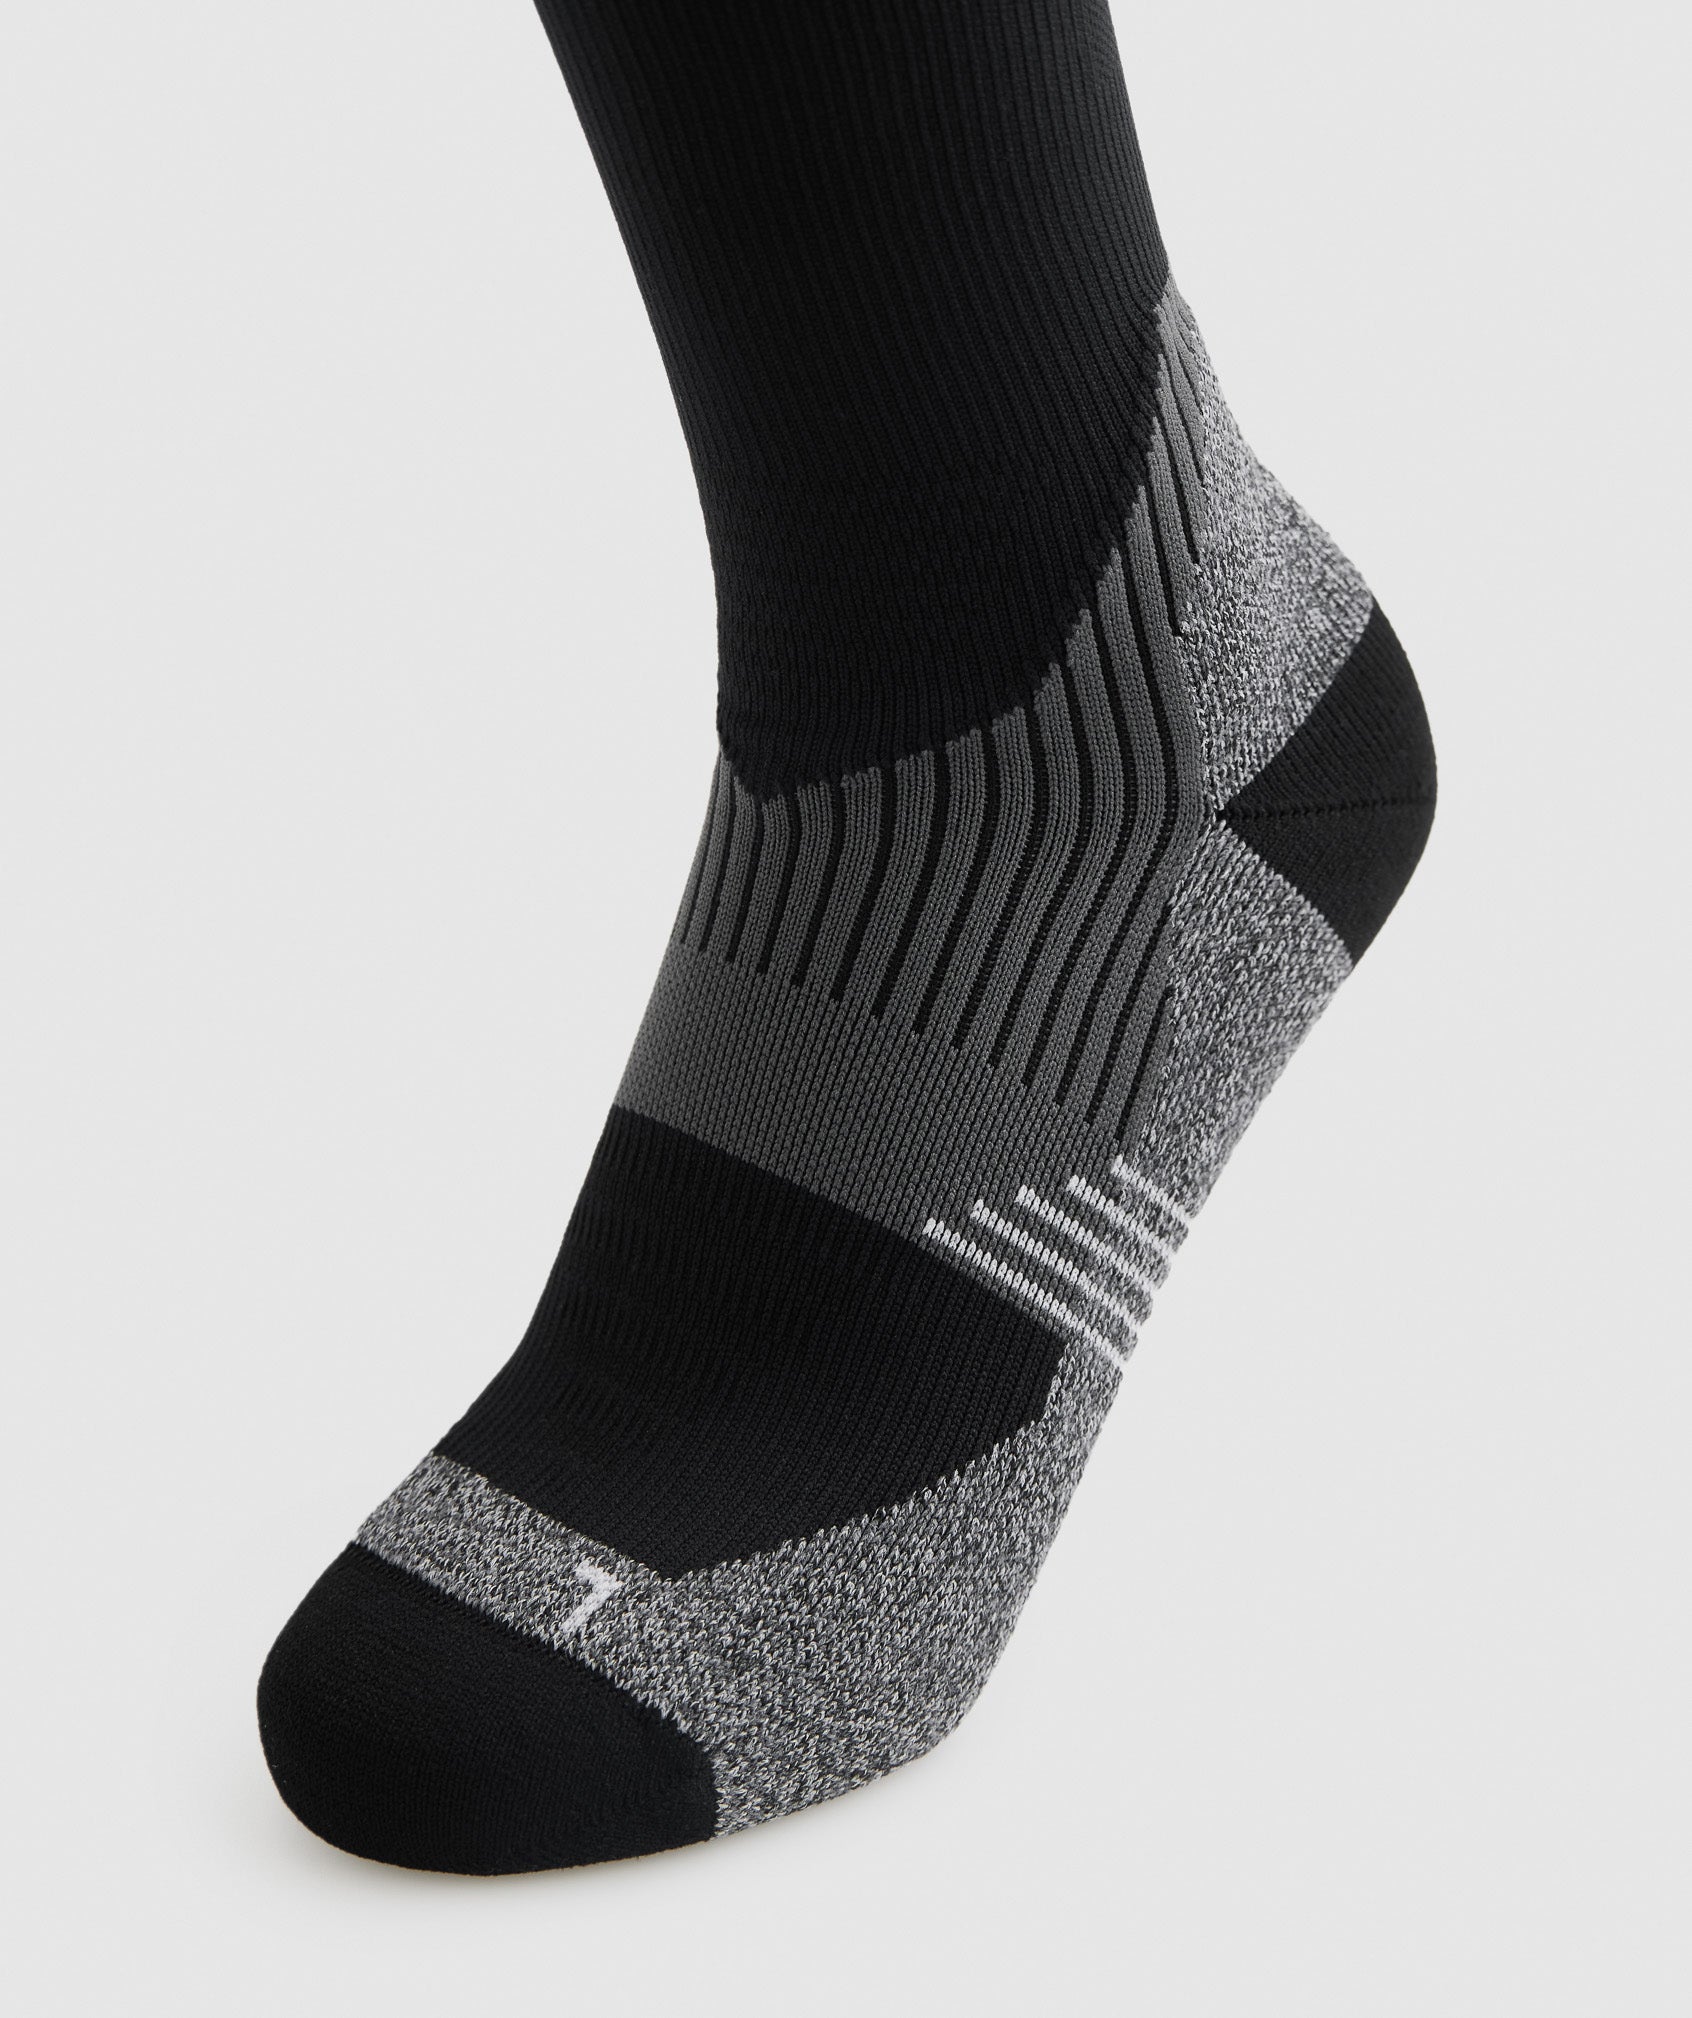 Long Performance Socks in Black - view 4